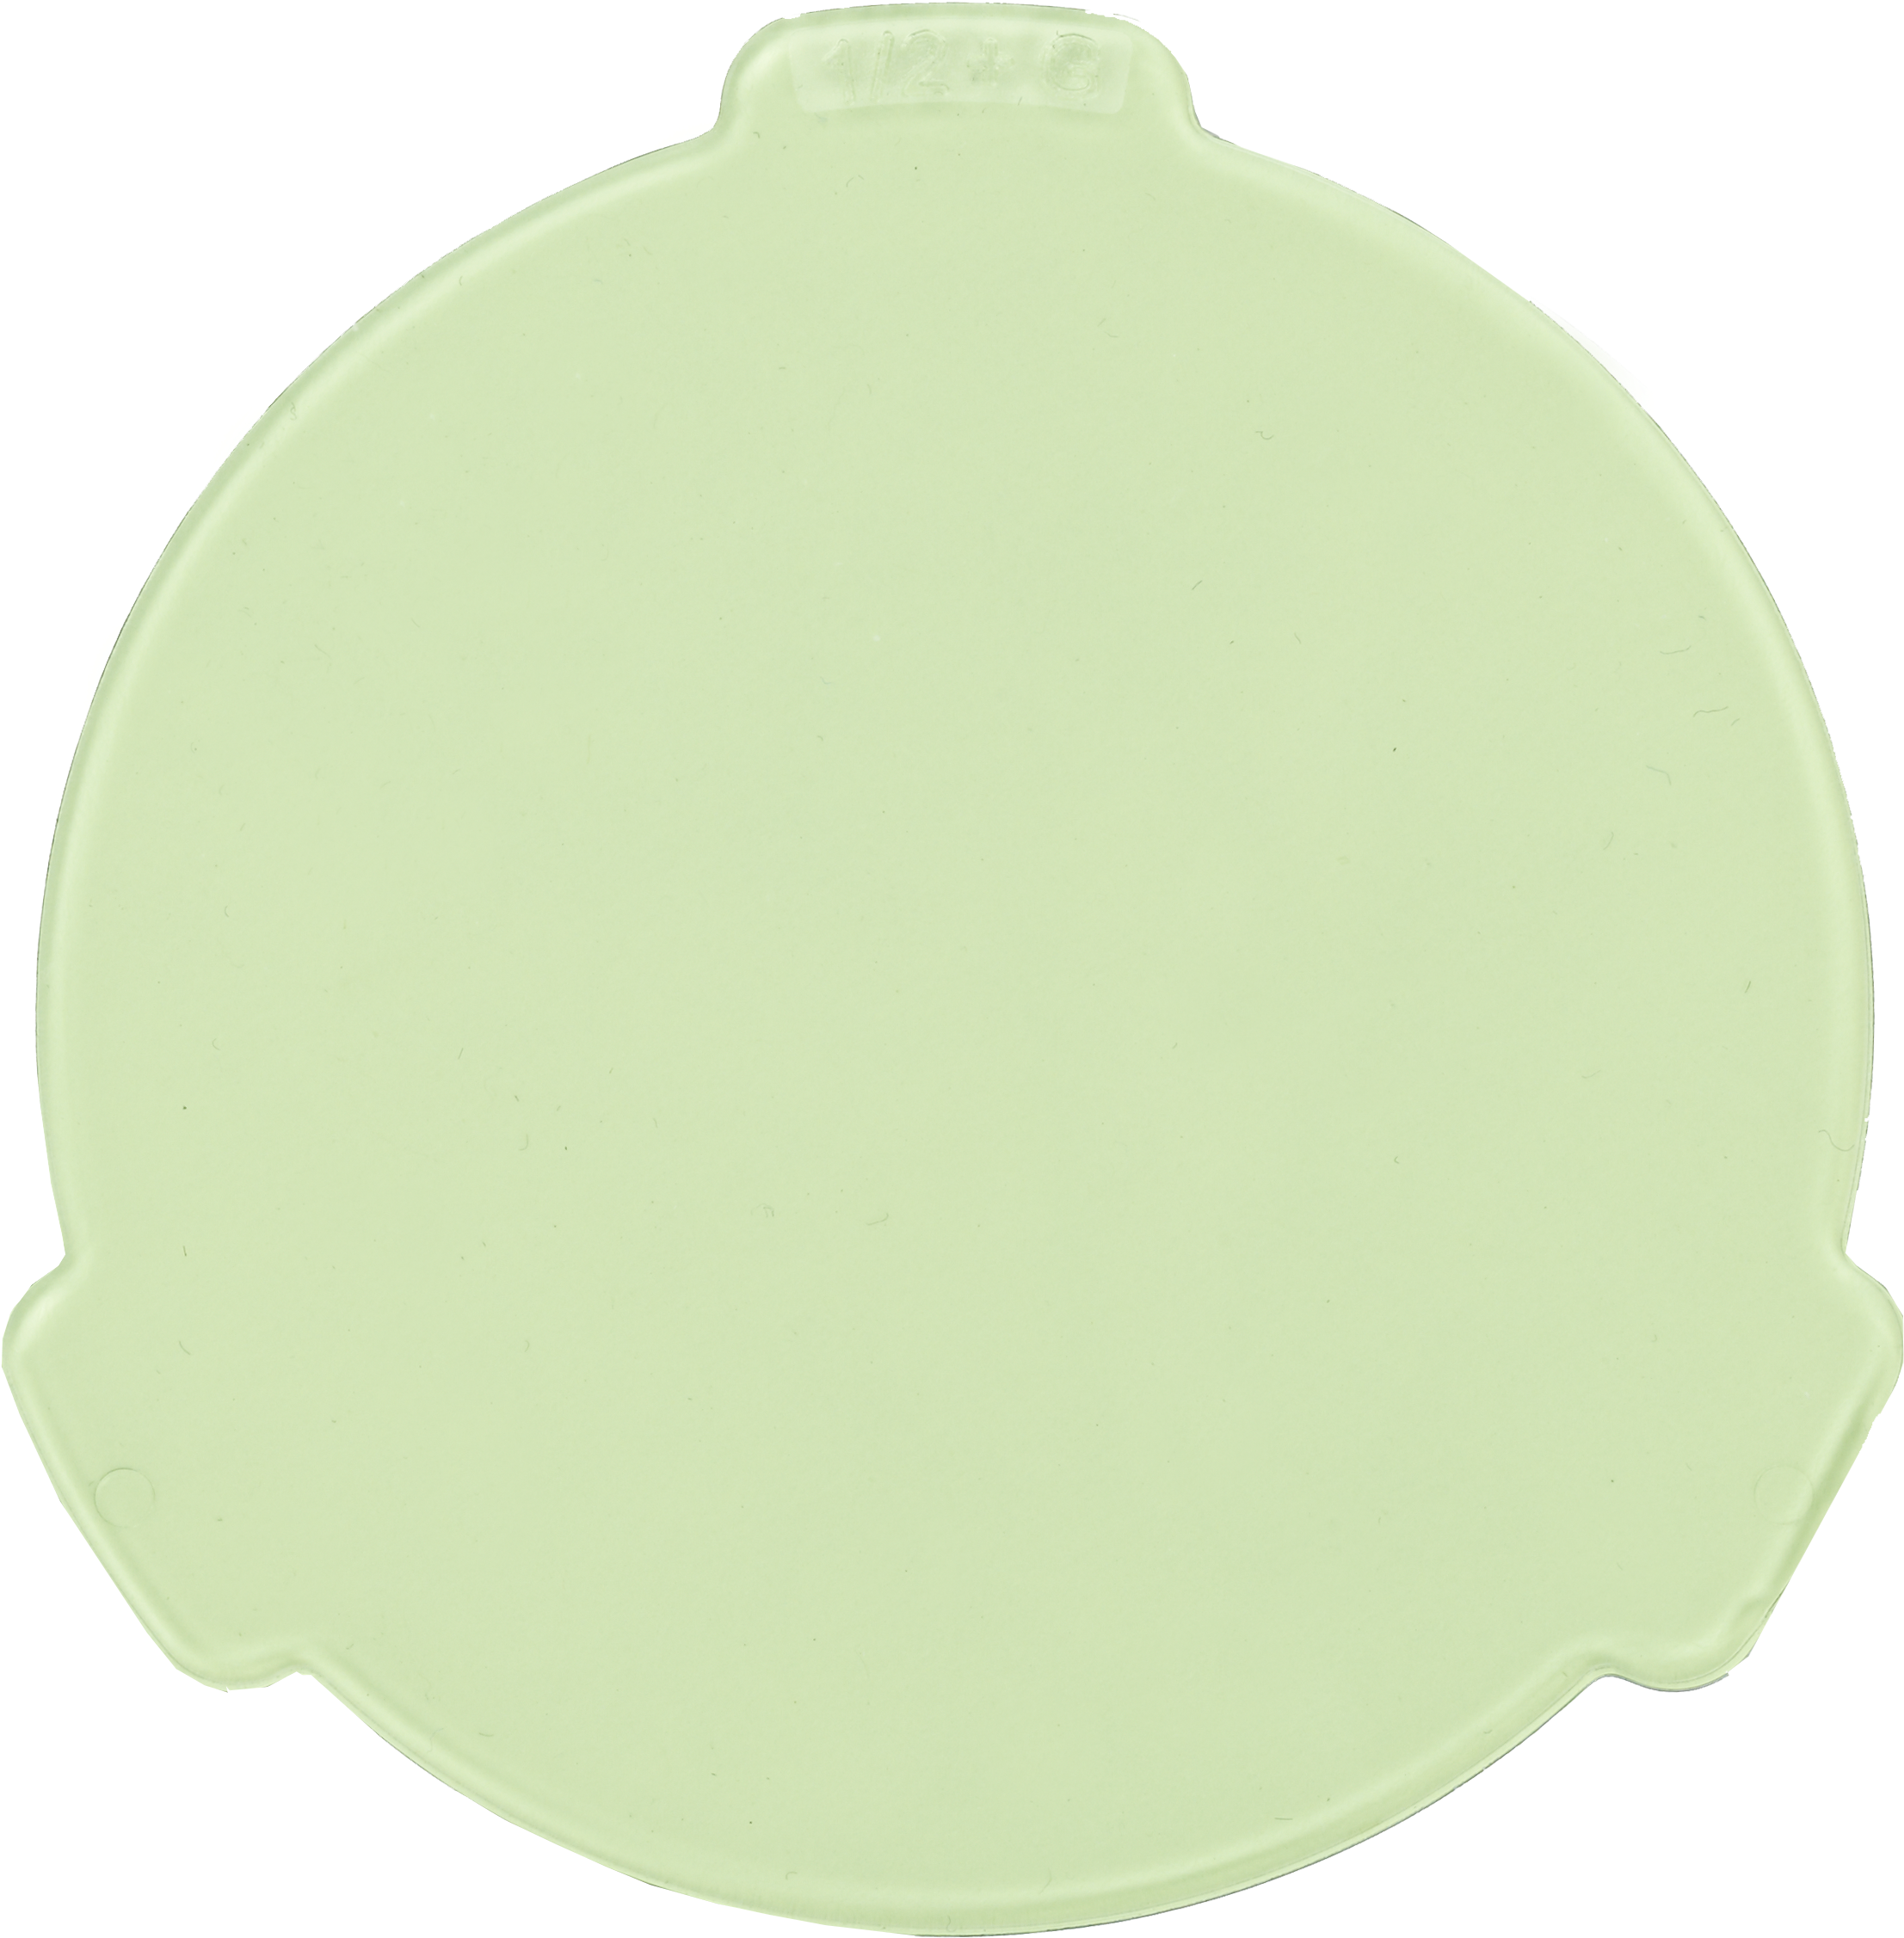 101209 J Profoto Gel Kit Half Green Productimage - Circle (2252x2252)